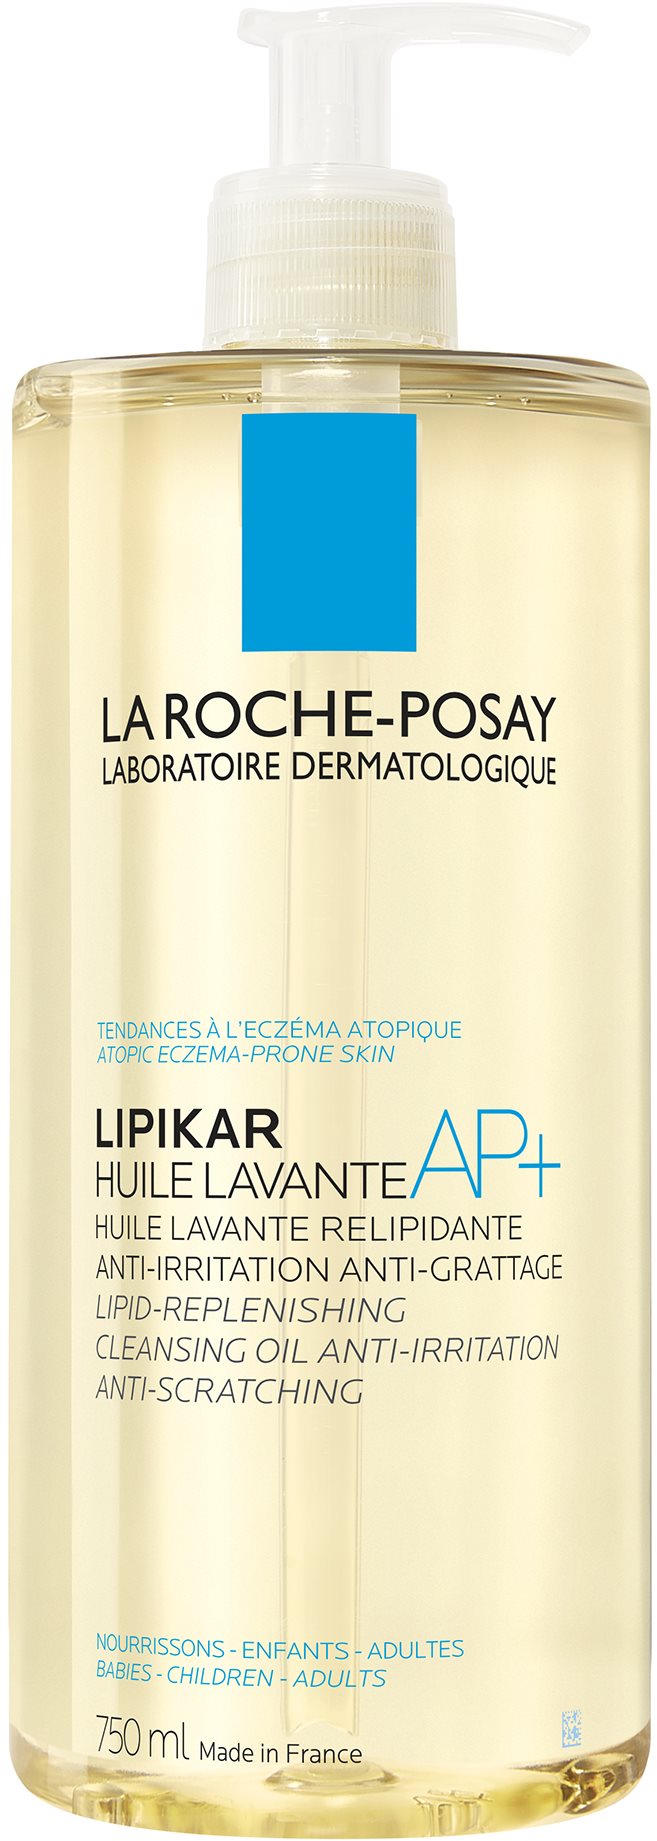 LA ROCHE-POSAY Lipikar Huile Lavante AP+ 750 ml